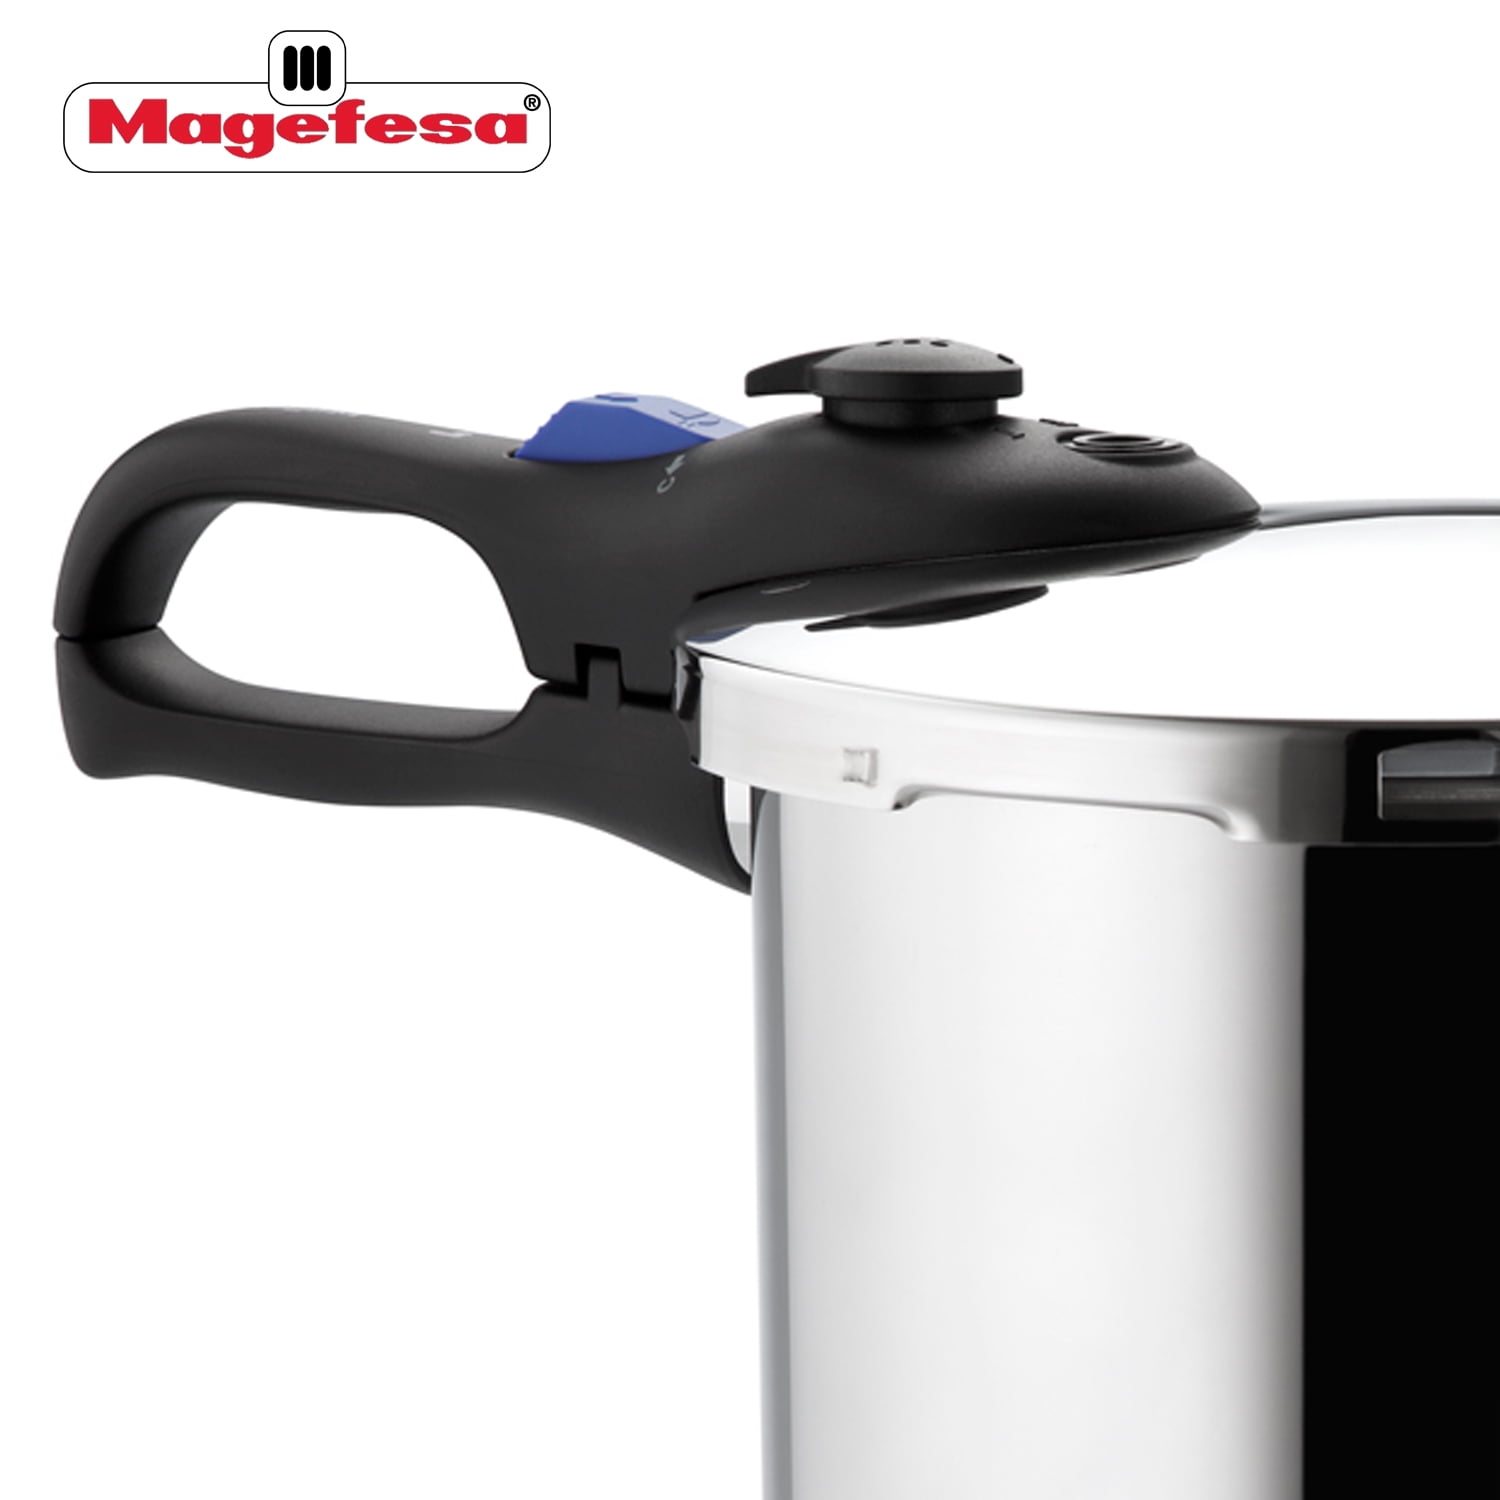 MAGEFESA ® Star fast pressure cooker, 10.6 Quart, 18/10 Polished